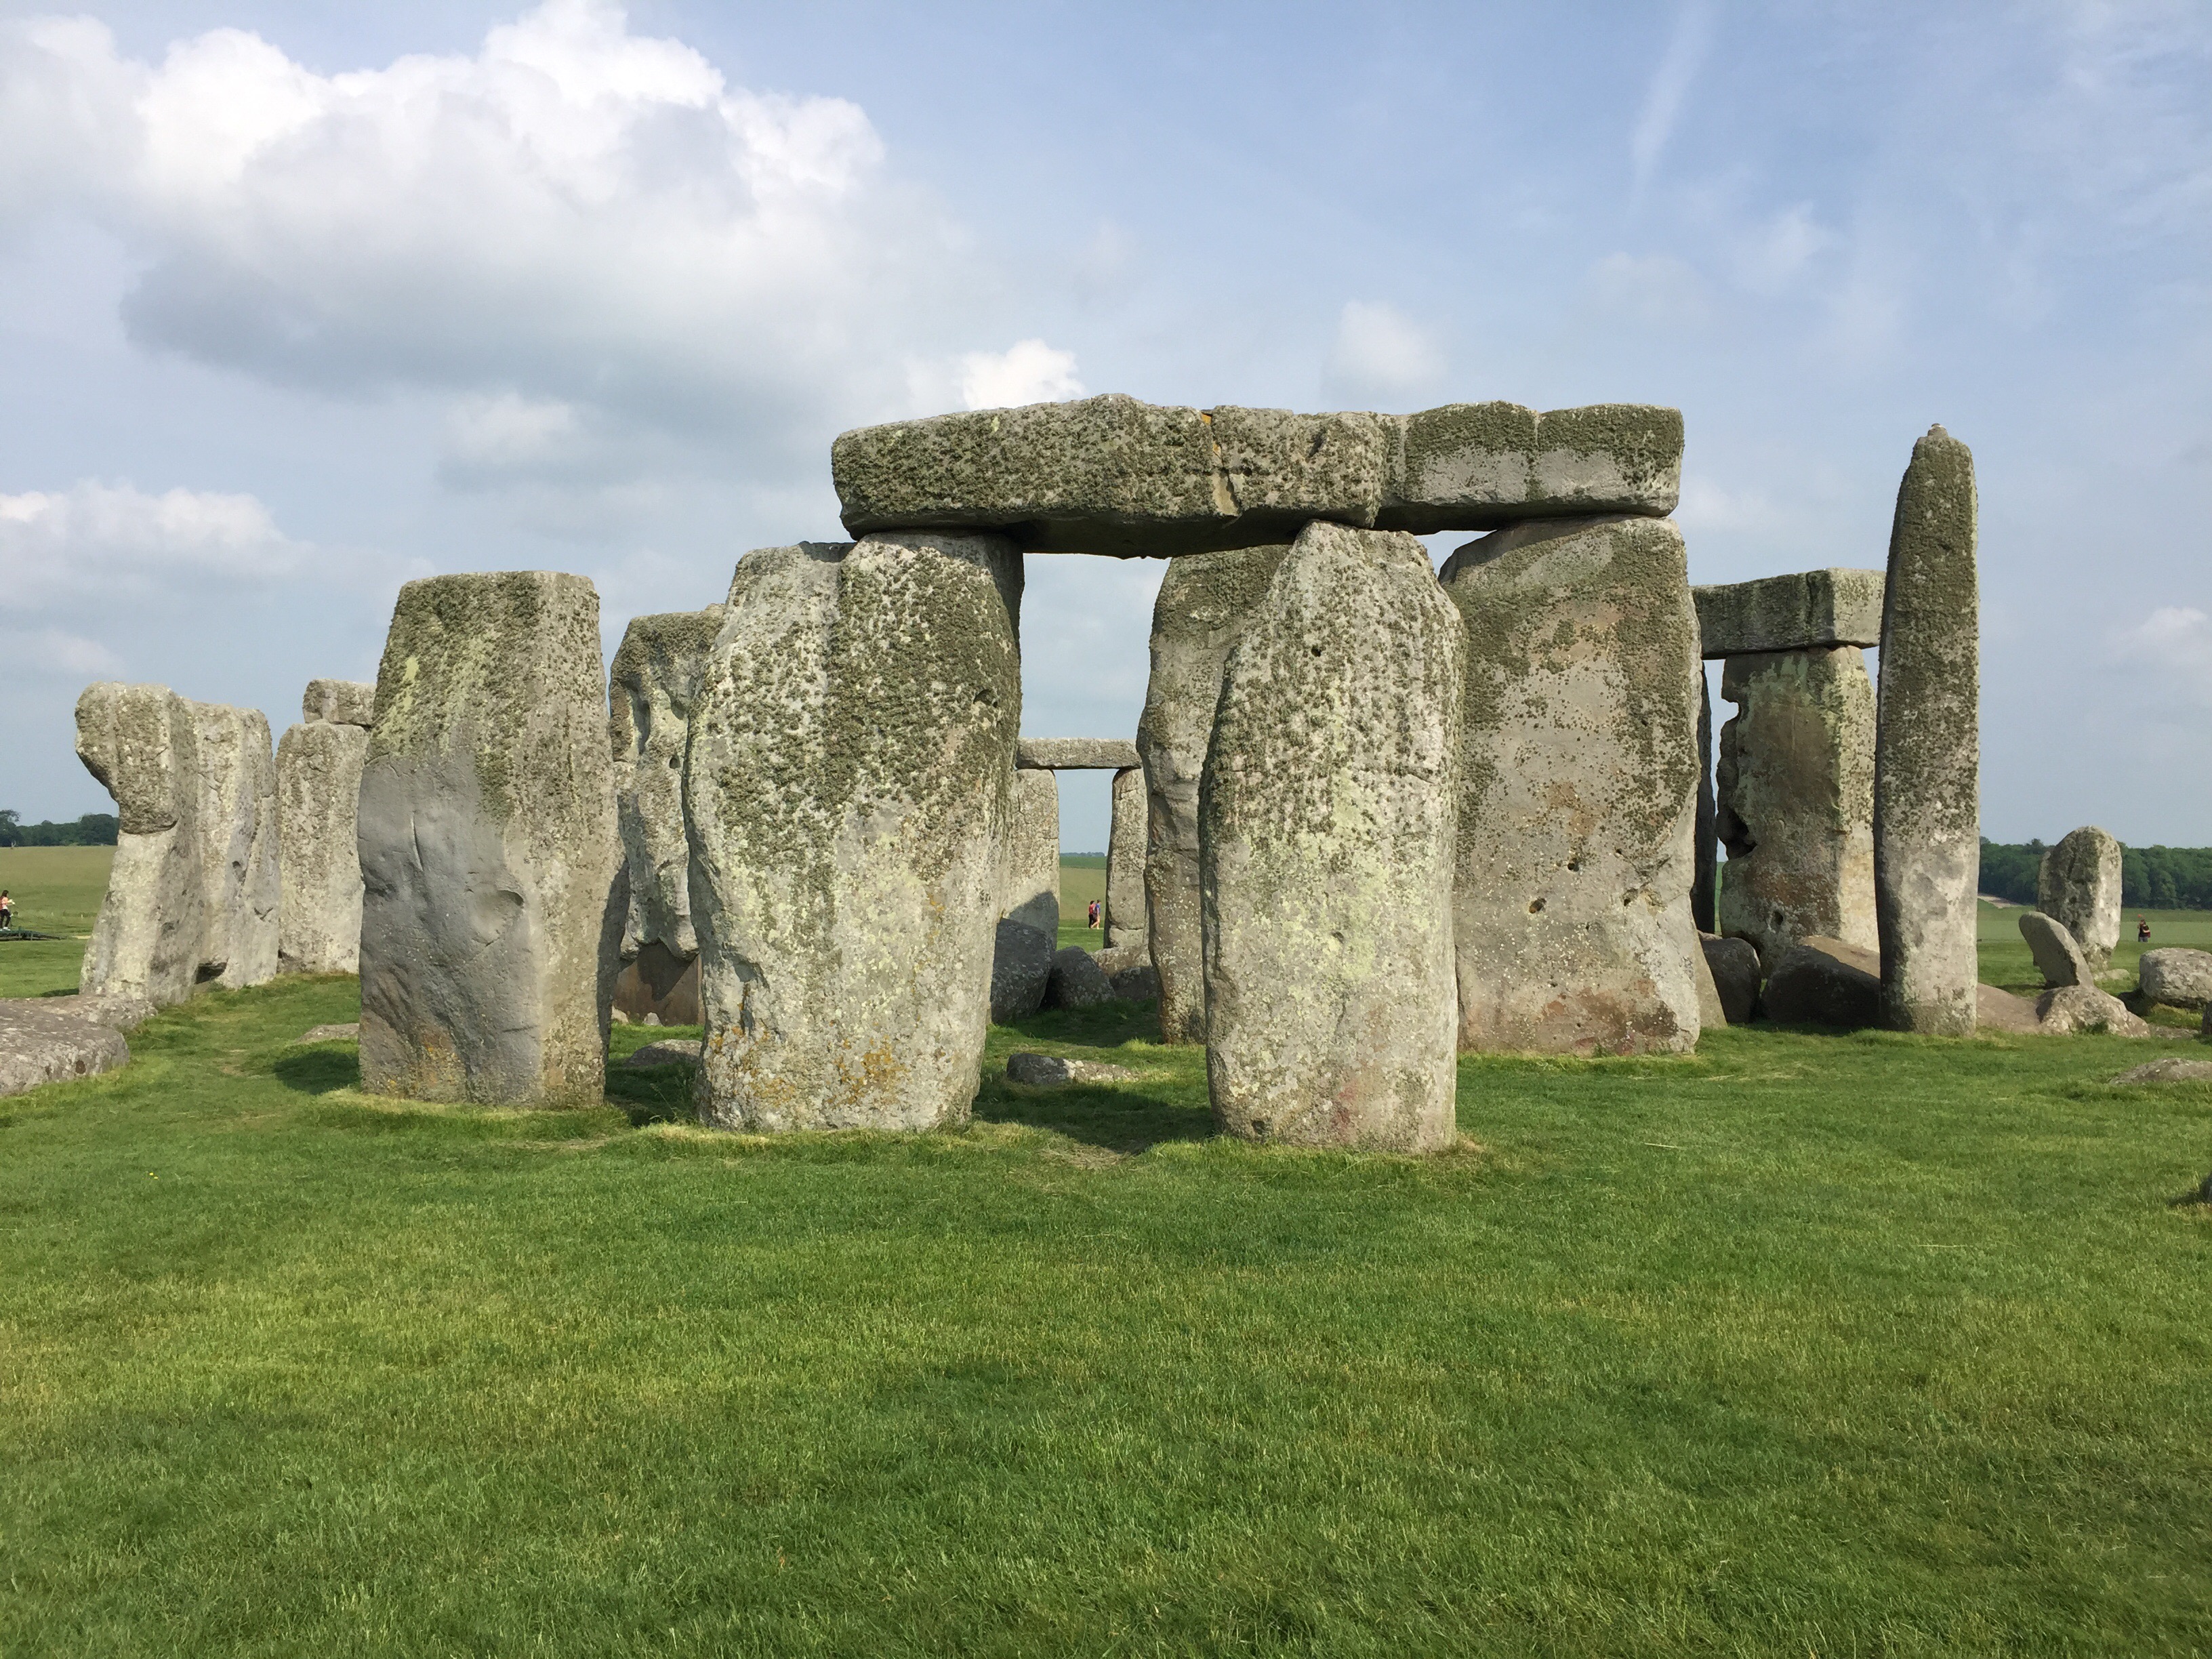 The famous stonehenge